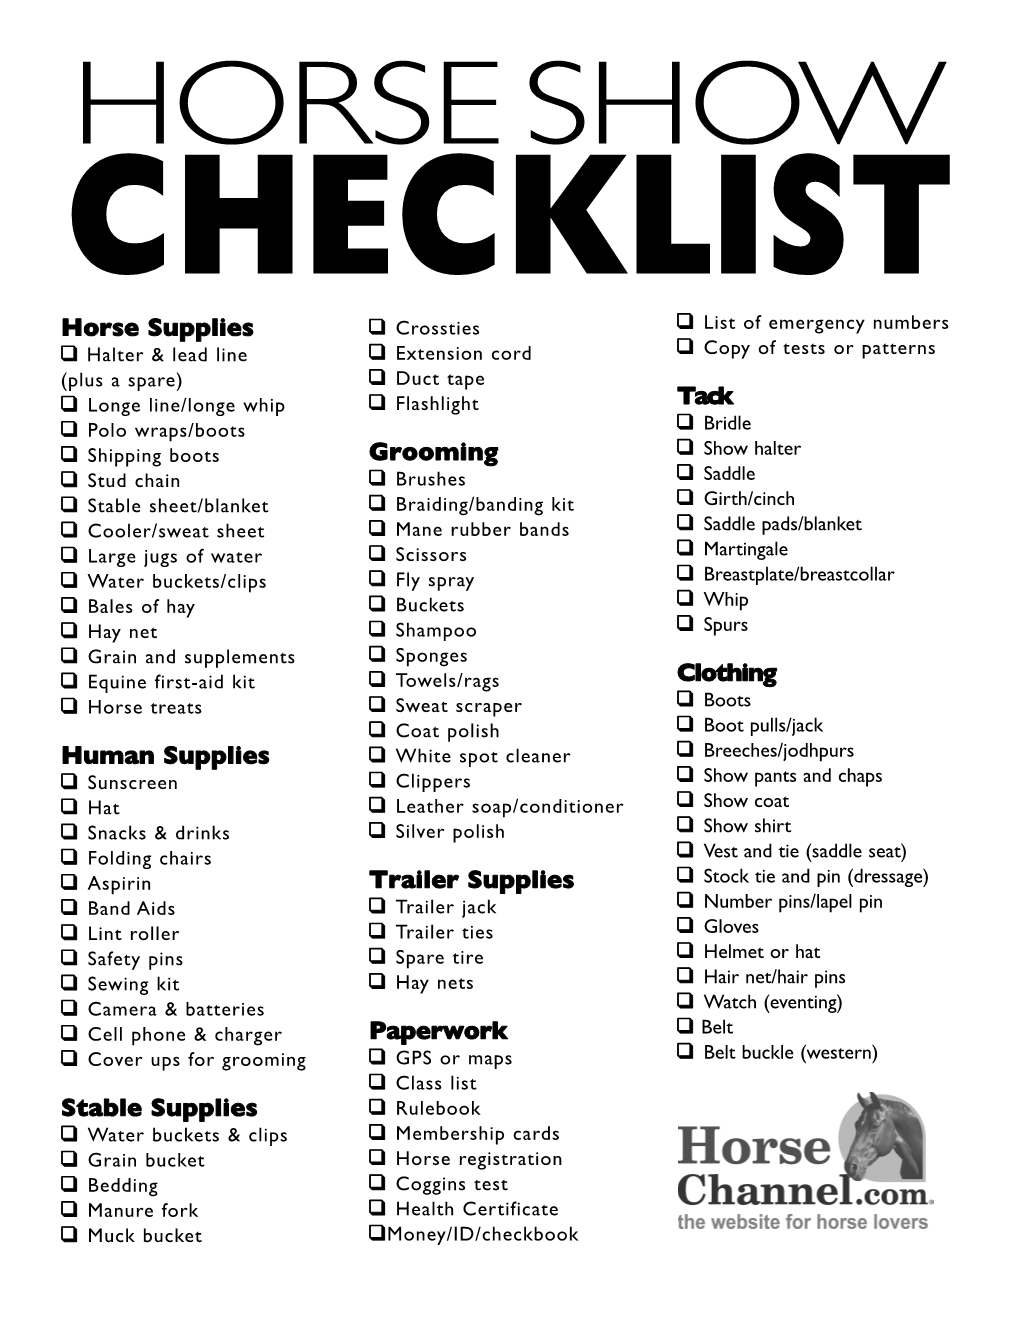 Horse Show Checklist